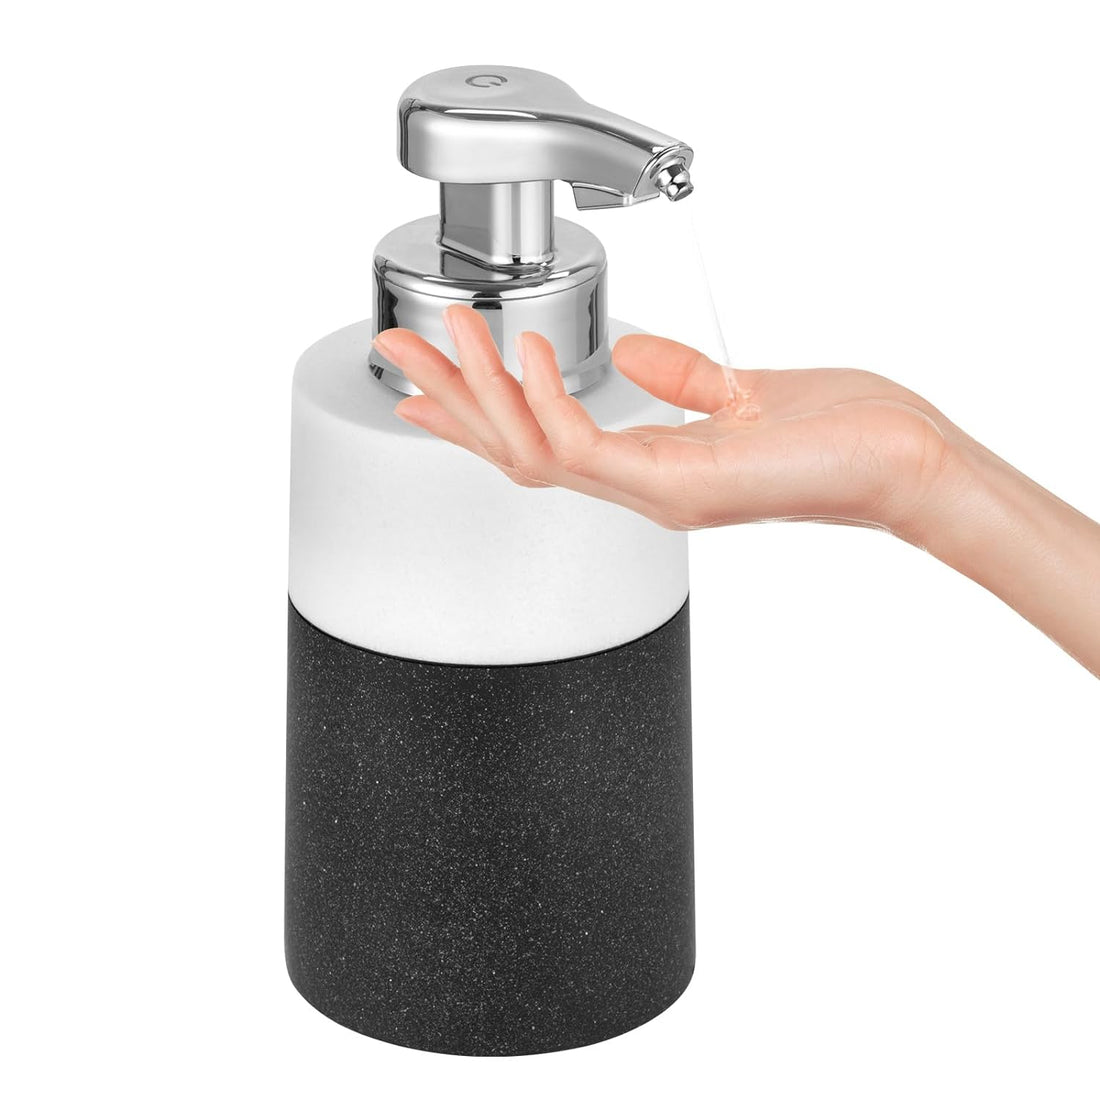 Automatic Soap Dispenser Touchless: 10oz Liquid Soap Dispenser, Hand Free Soap Dispenser Rechargeable Soap Dispenser, for Bathroom, Kitchen, Hotel